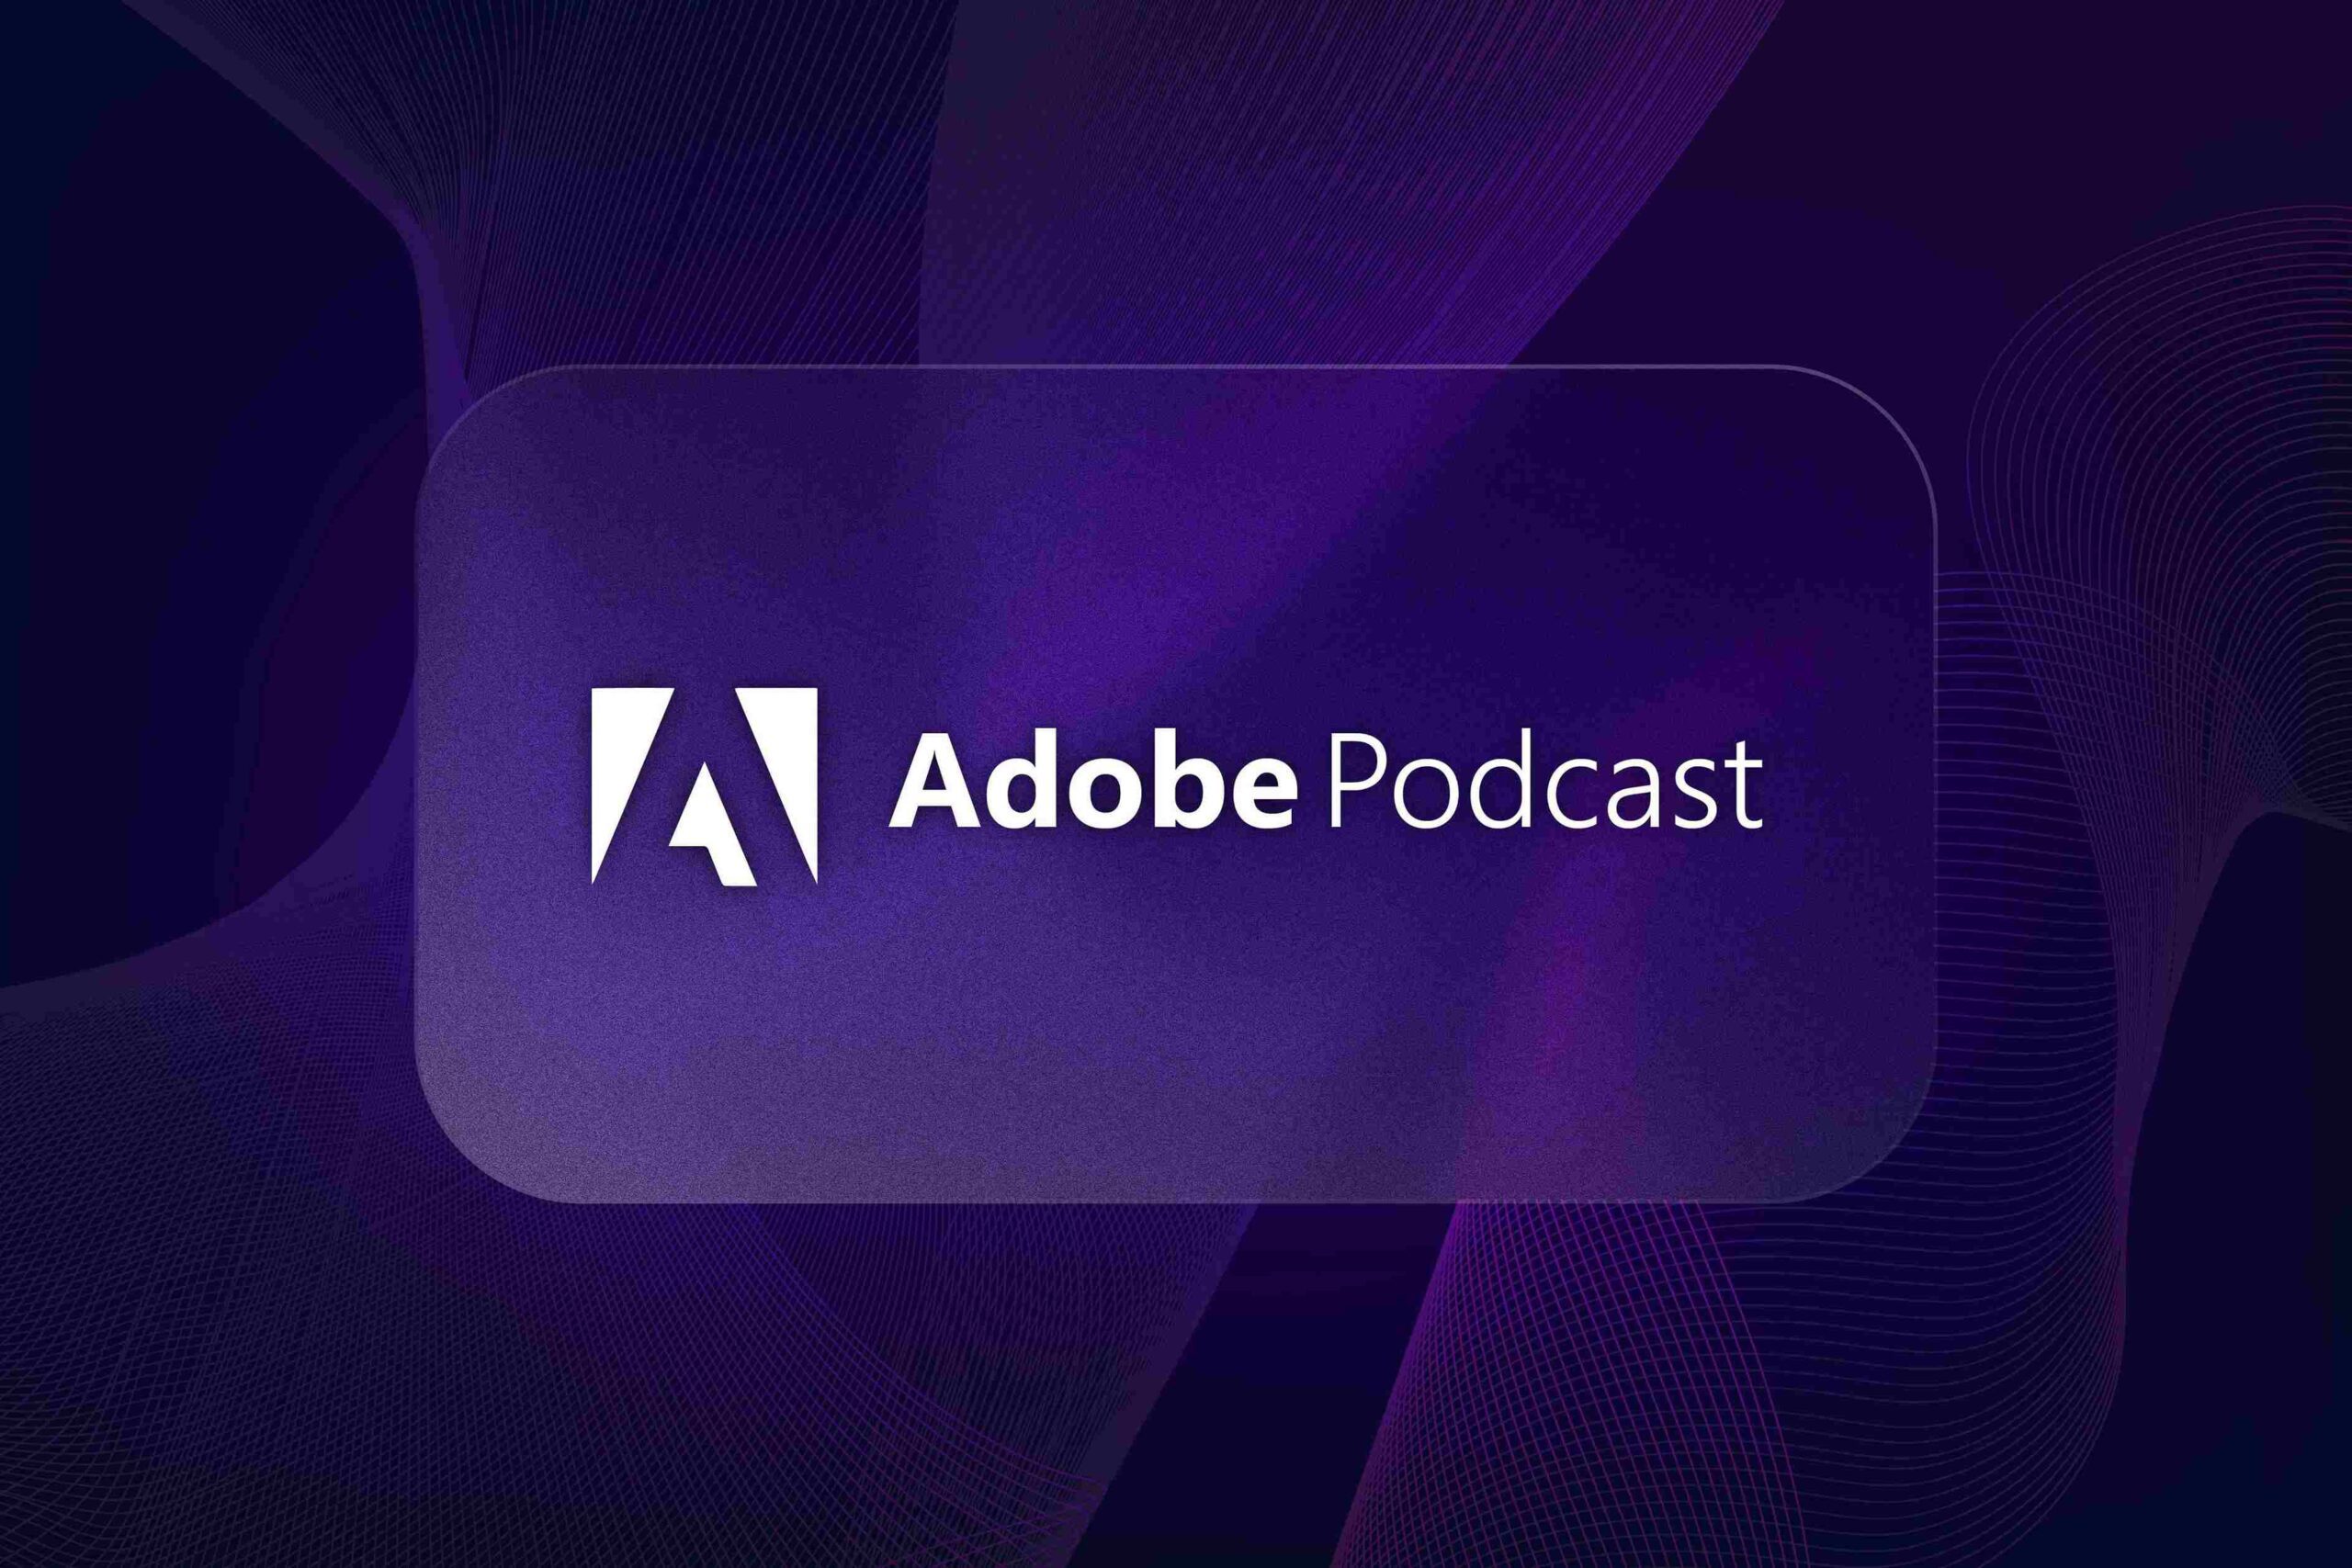 adobe podcast